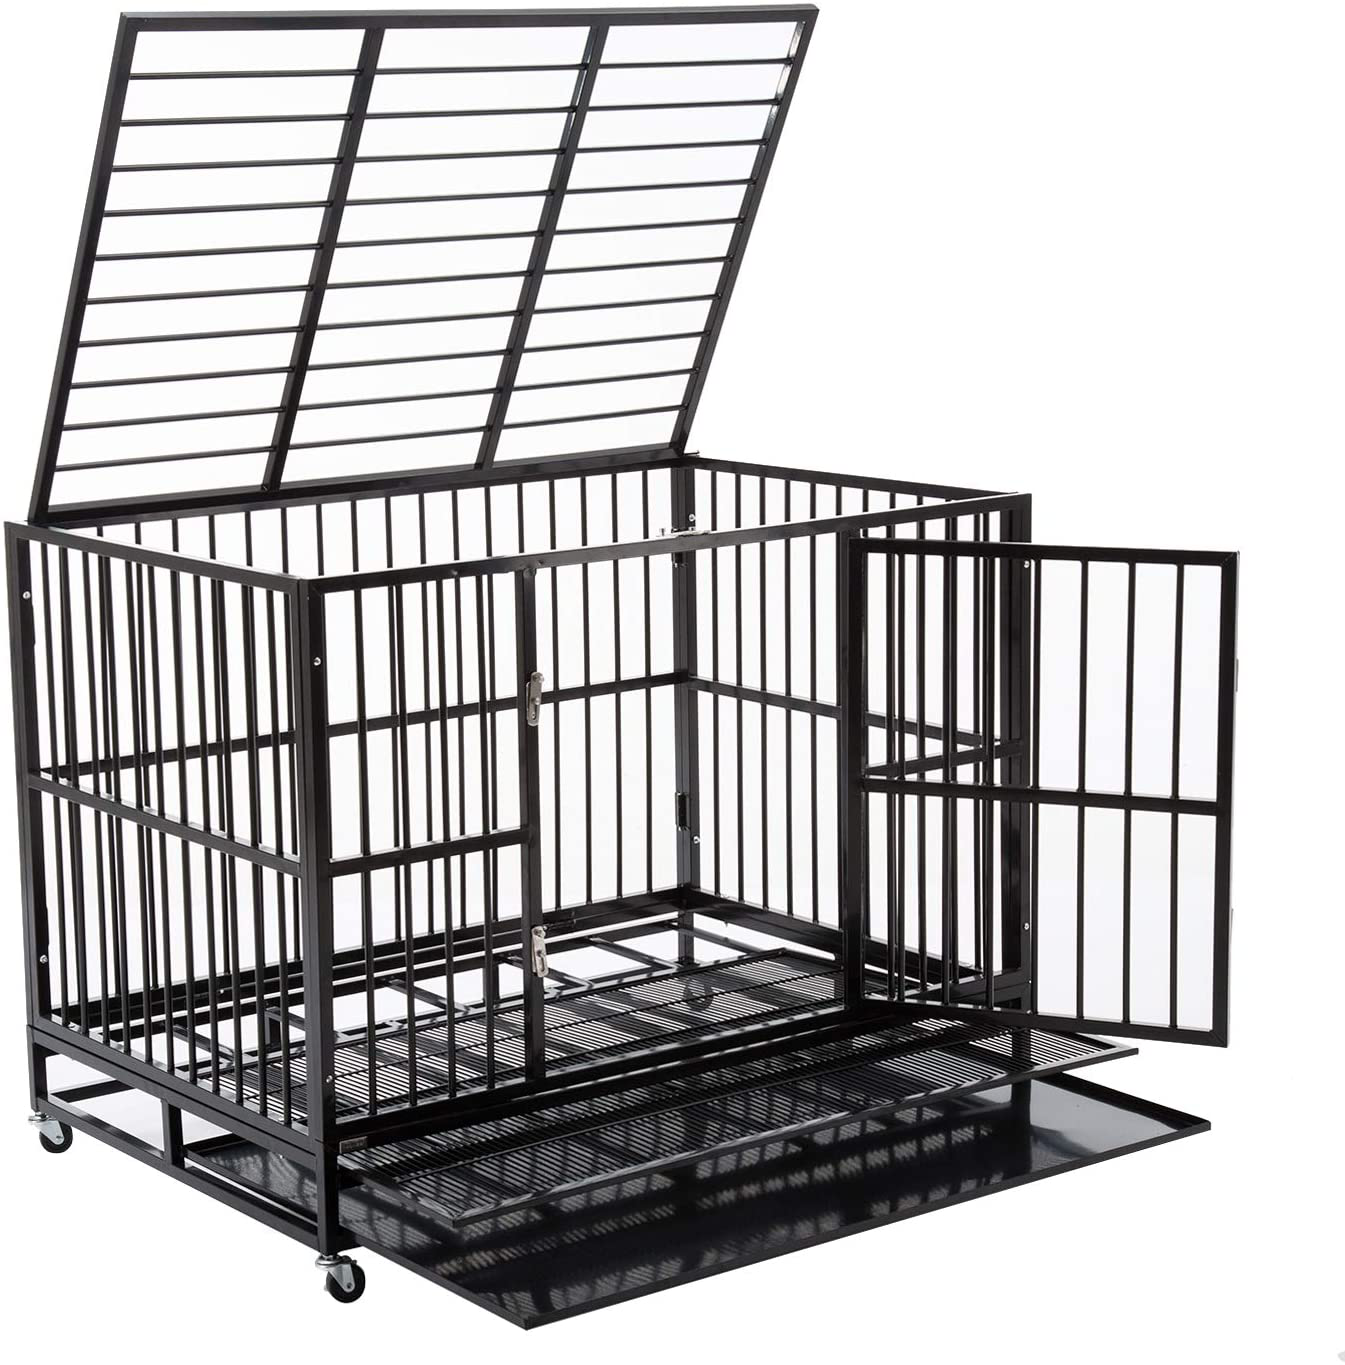 PANEY Large Heavy Duty Rolling Dog Cage Crate Kennel Metal Pet Playpen W/Wheels Double Door